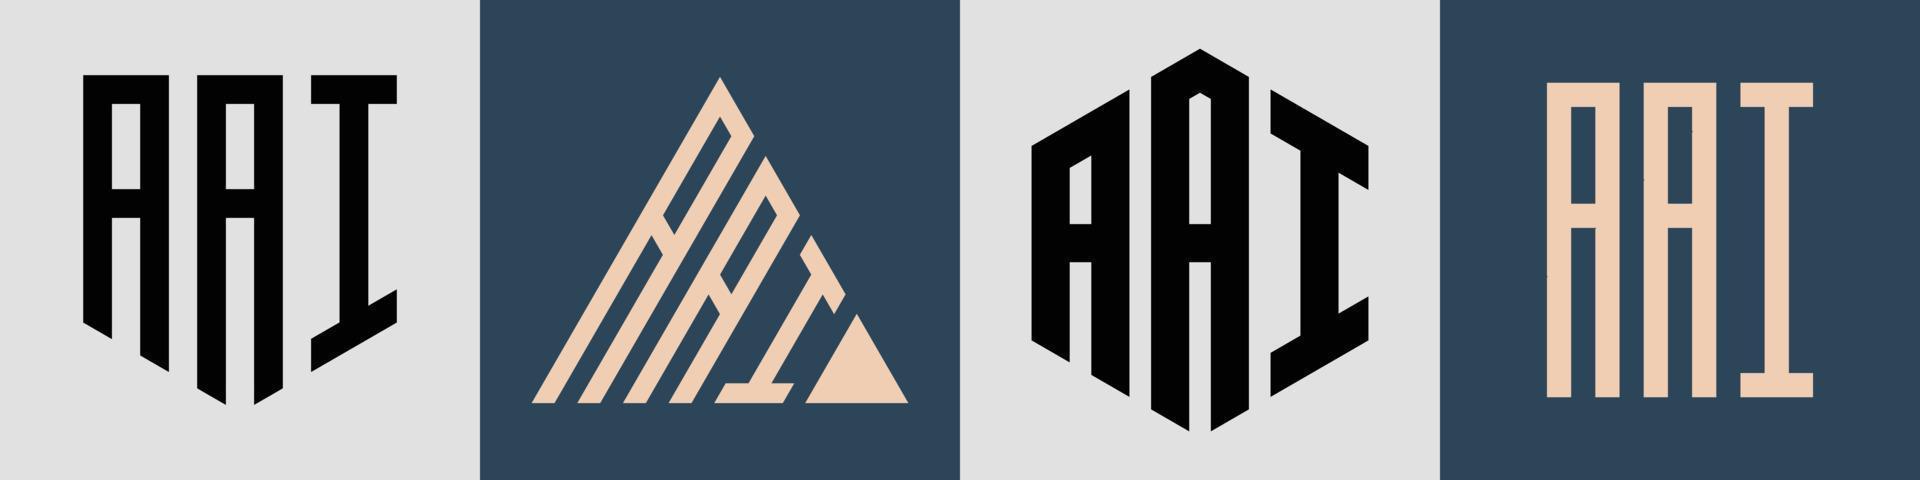 kreative einfache anfangsbuchstaben aai logo designs paket. vektor